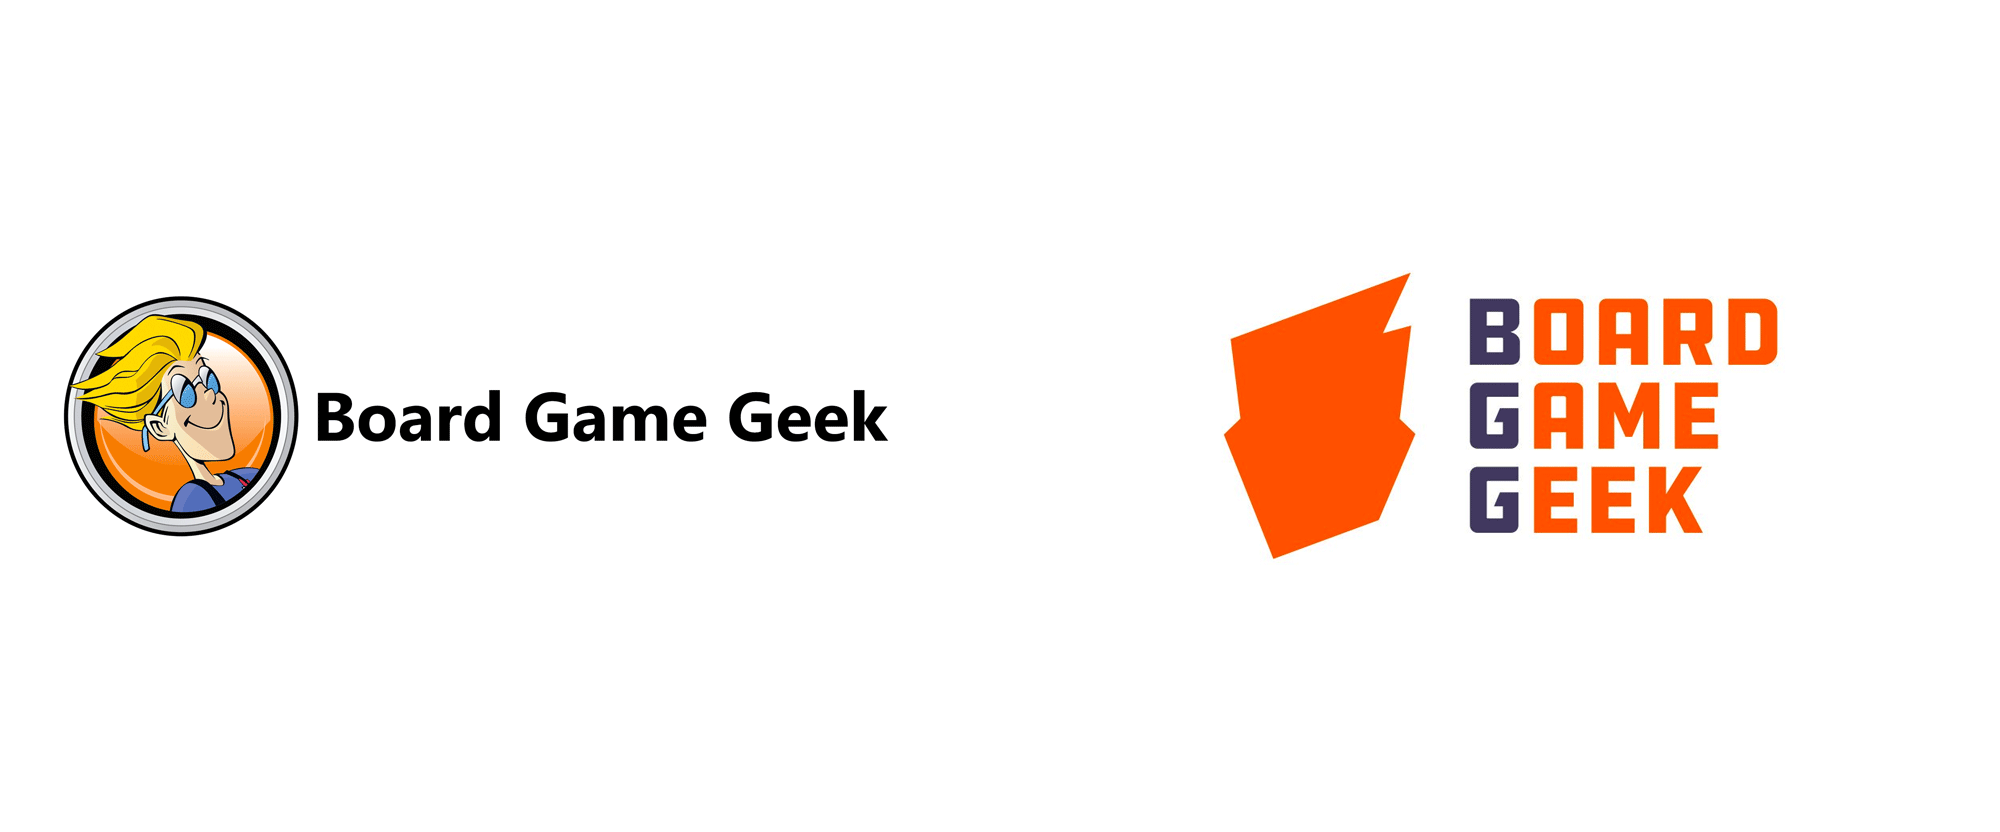 GameGeek